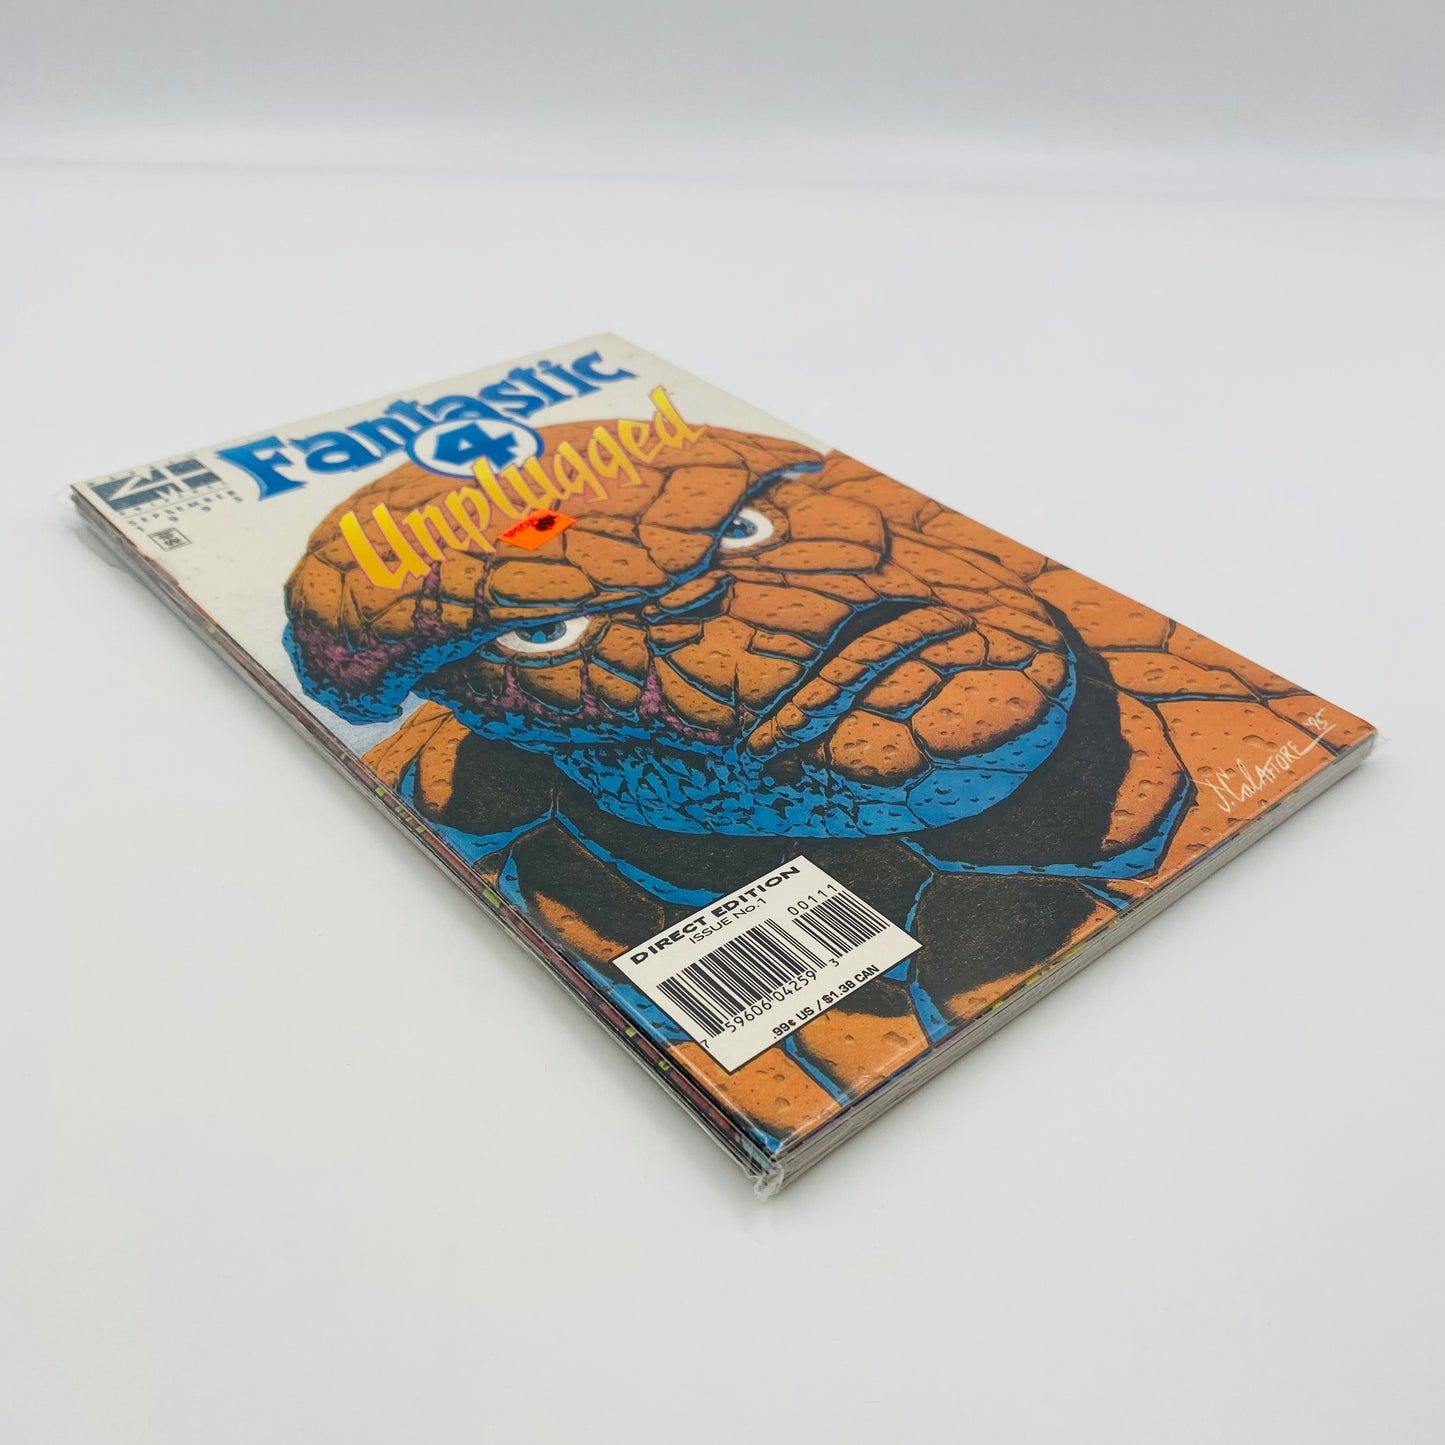 Fantastic Four Unplugged #1-6 (1995-1995) Marvel